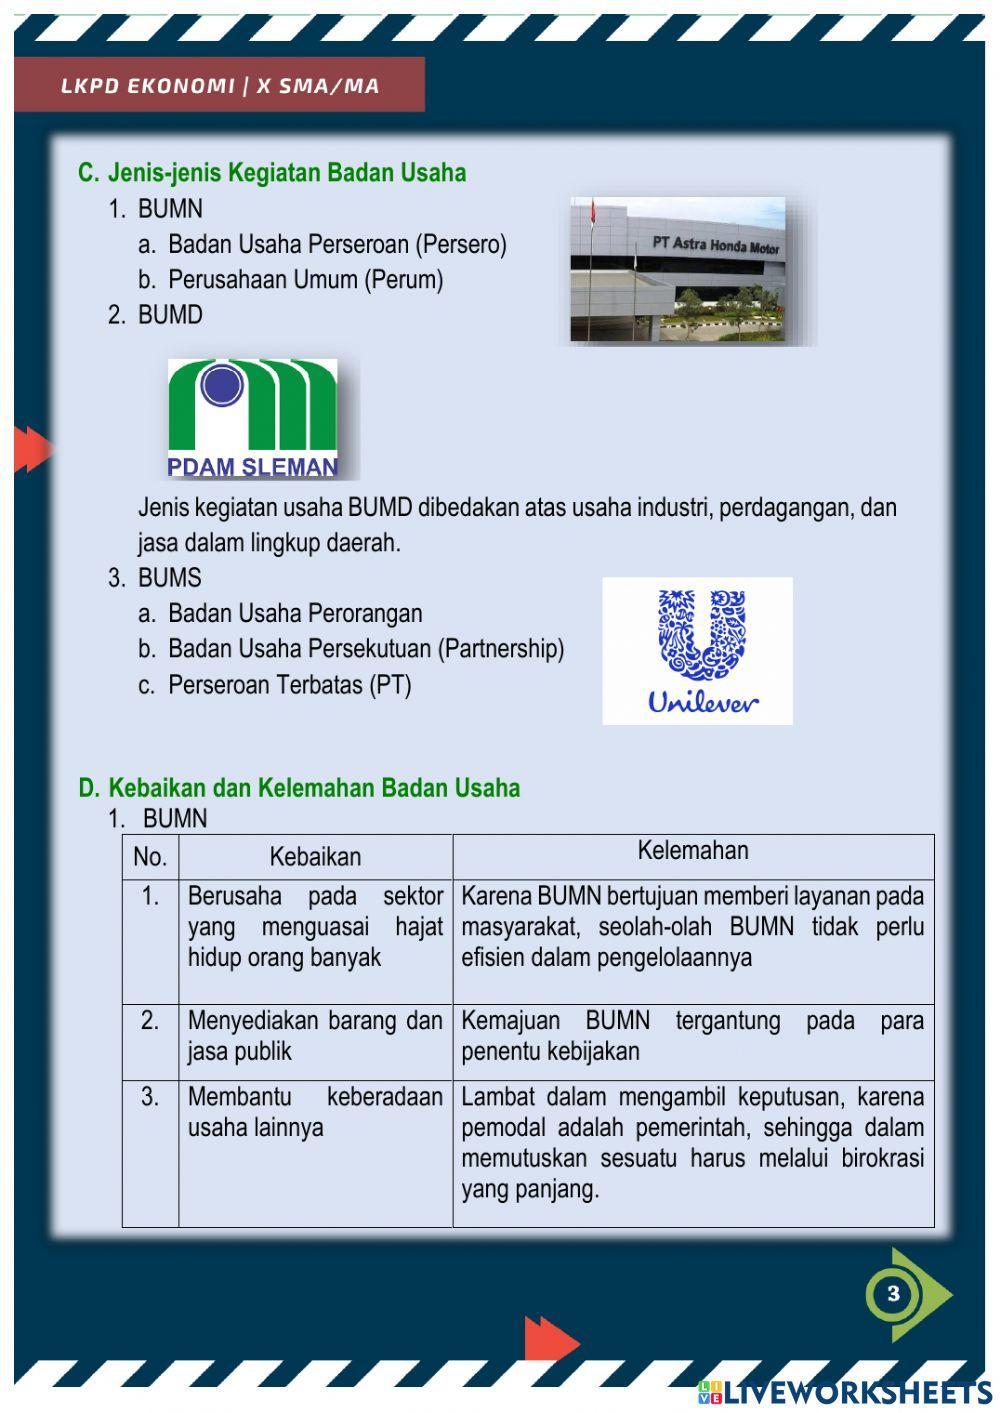 LKPD - Badan Usaha Dalam Perekonomian Indonesia